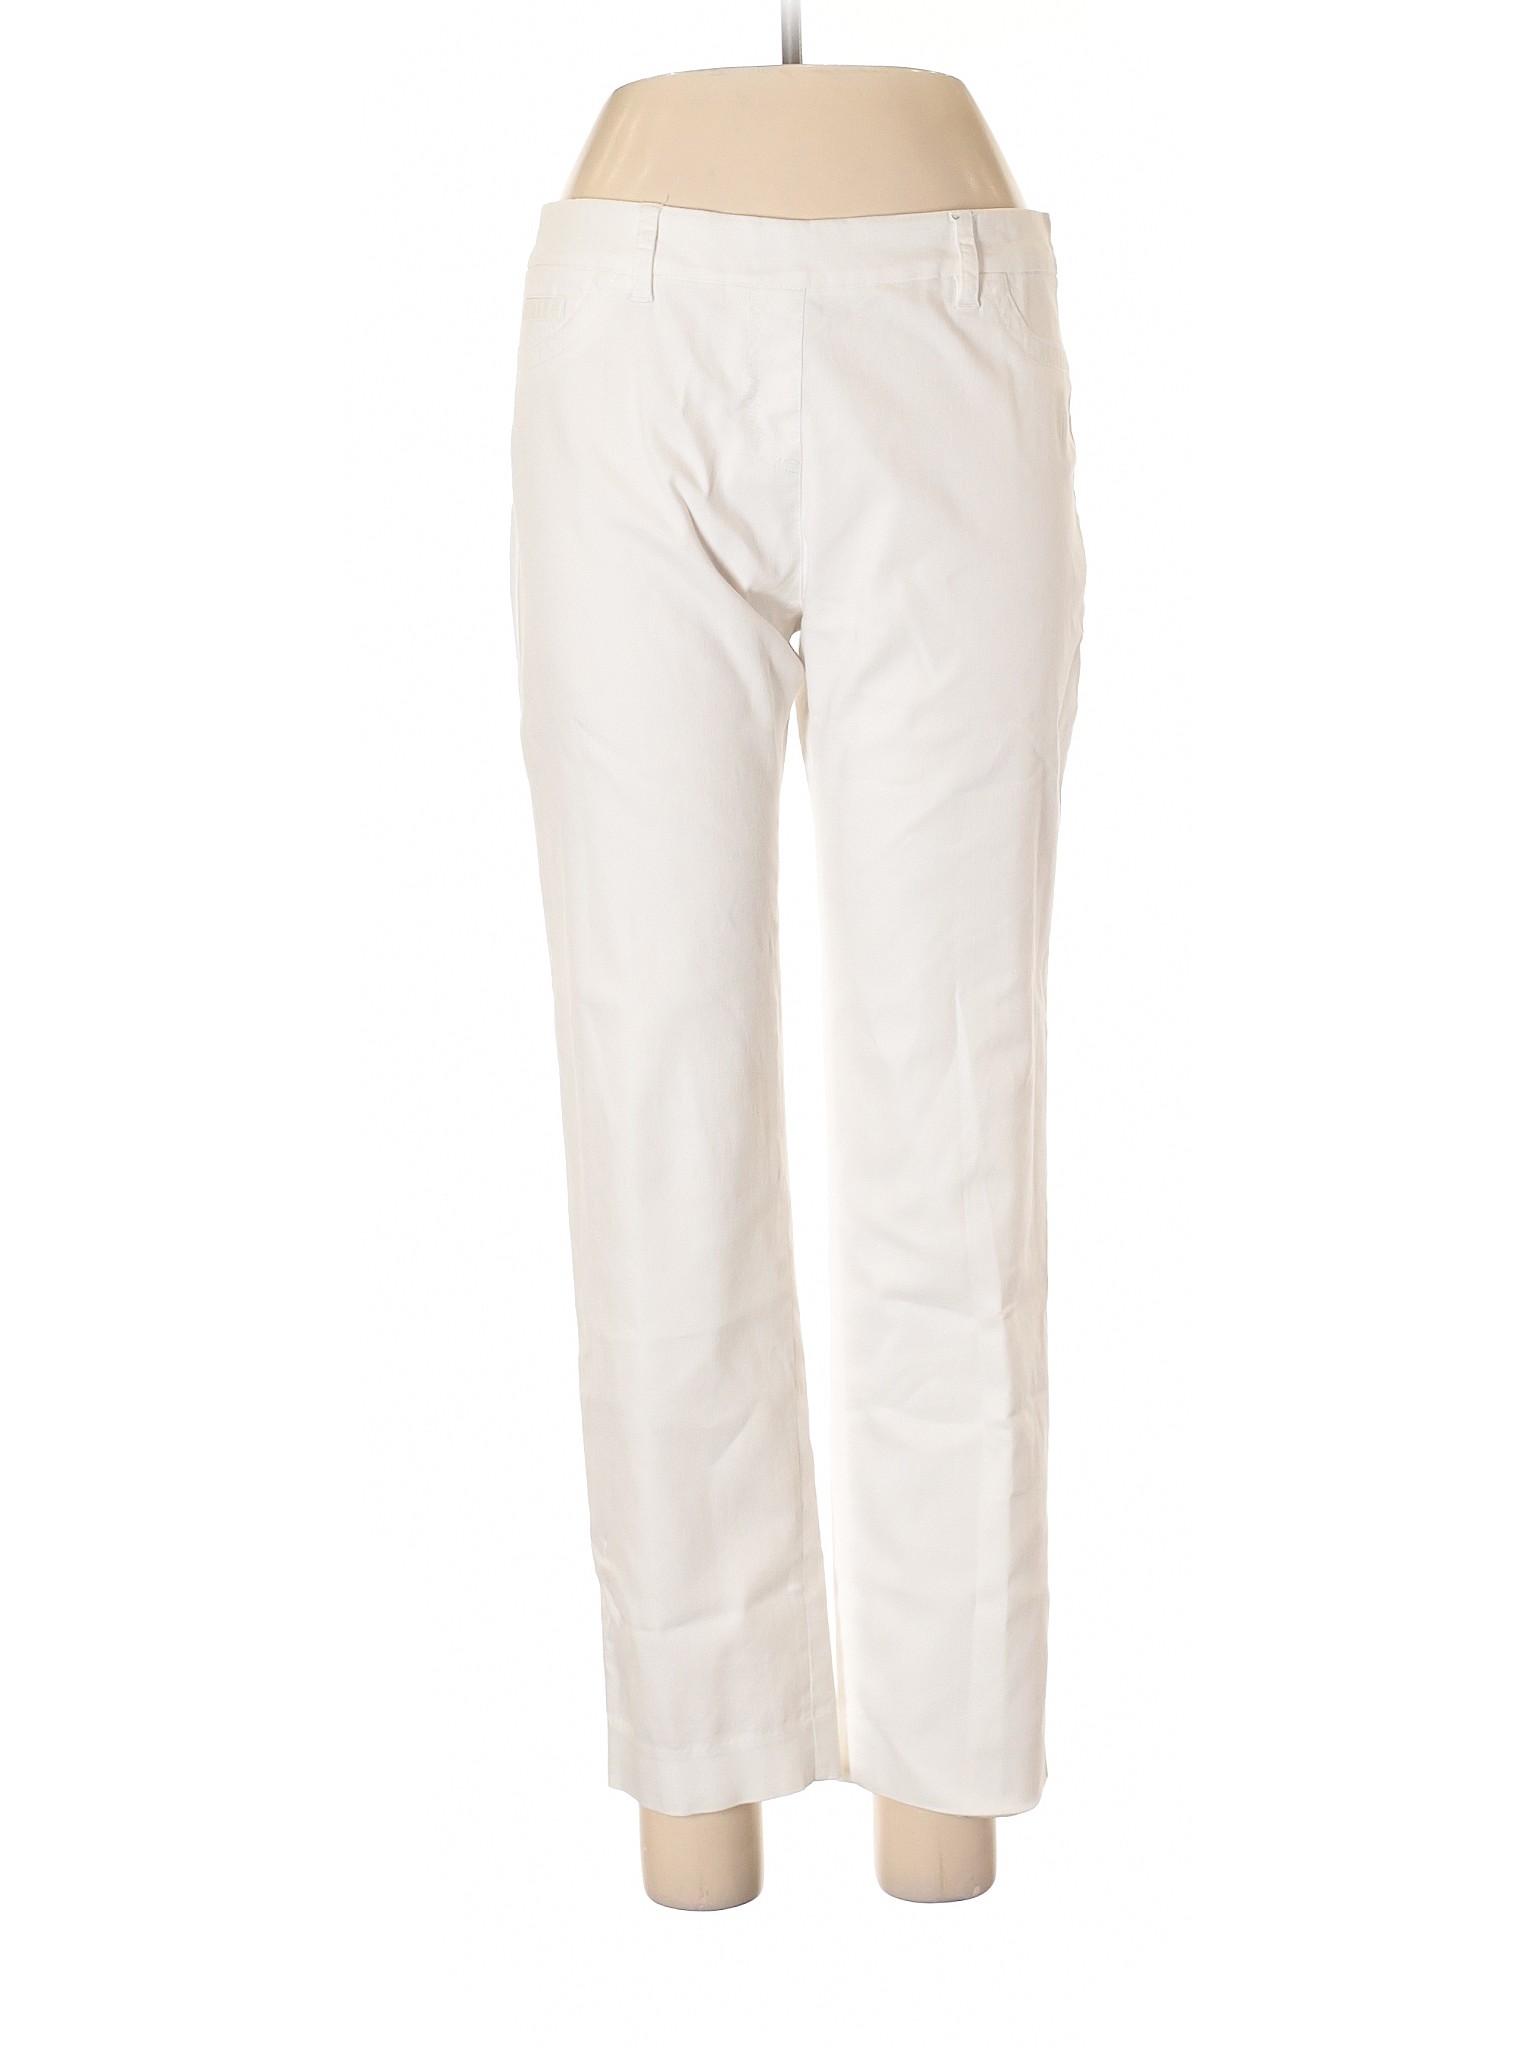 Zac & Rachel Women White Casual Pants 10 Petites | eBay